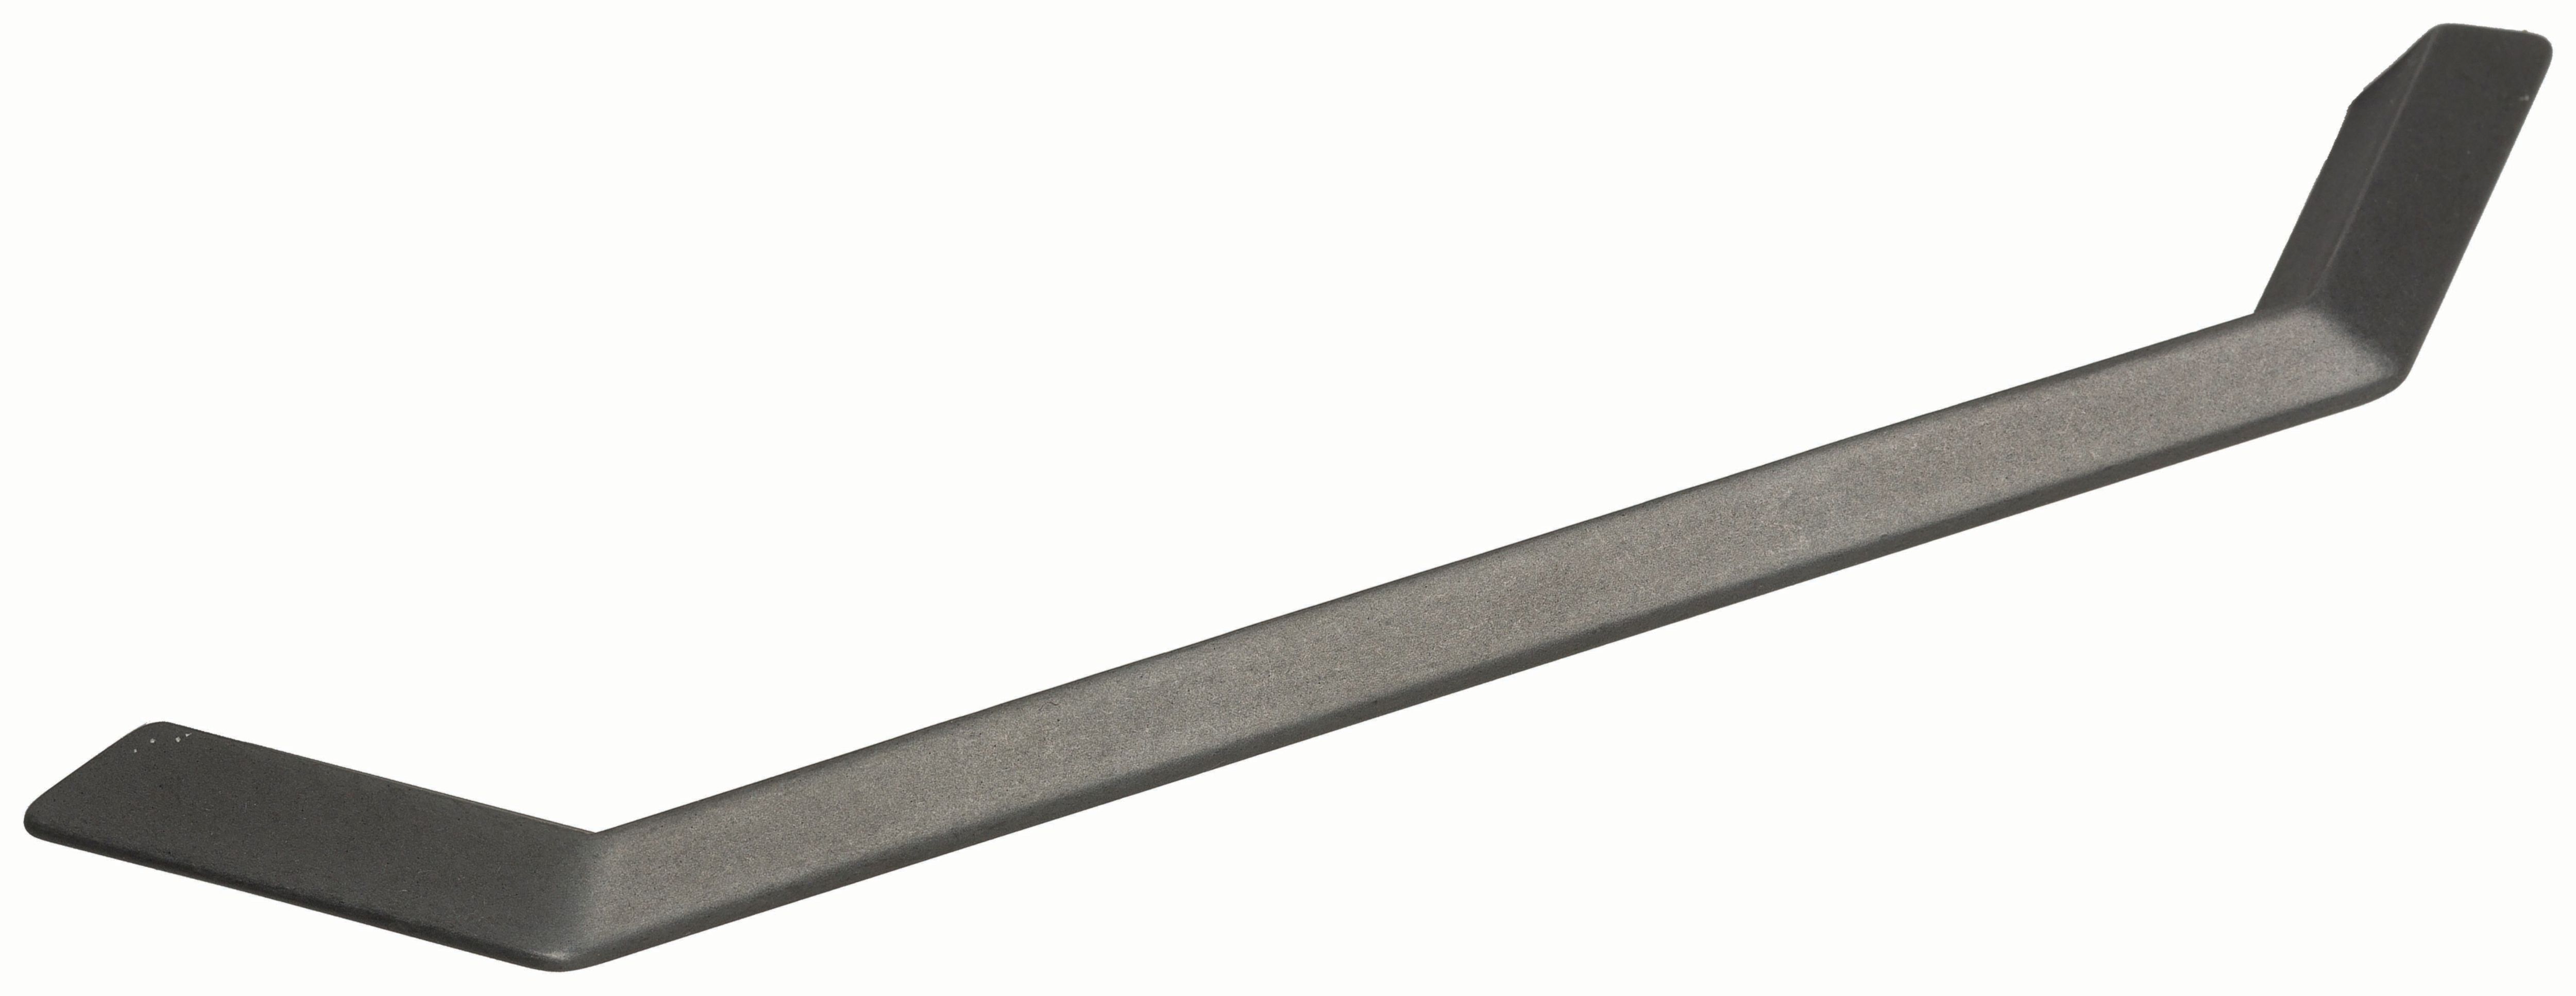 Wickes Walton Geometric Bar Handle - Brushed Nickel 218mm